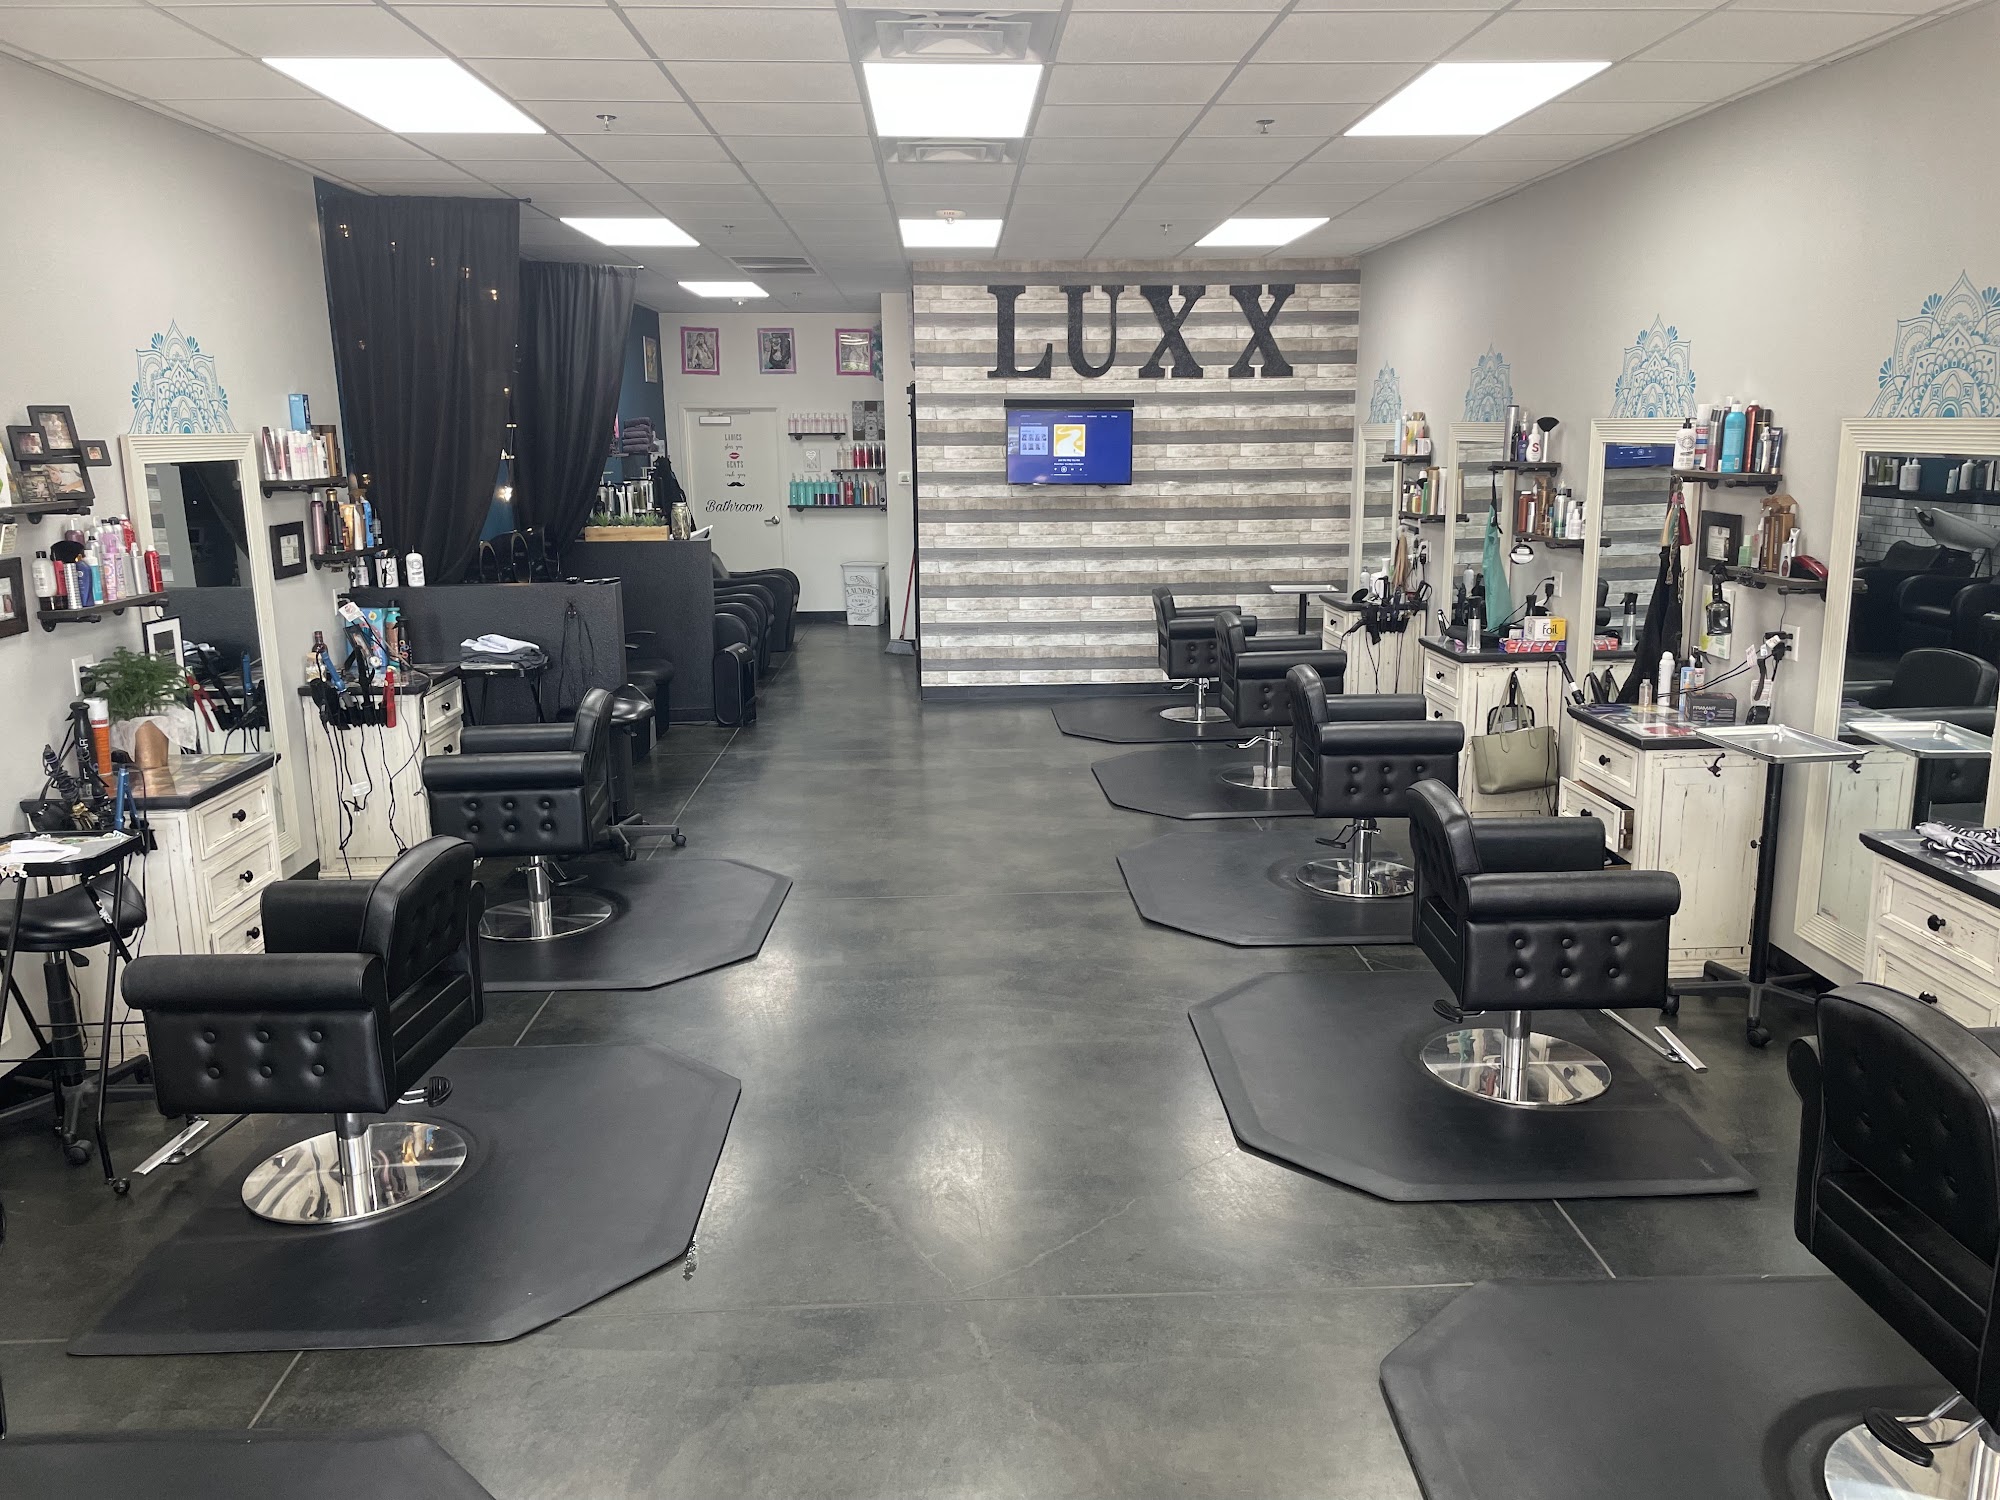 Luxx Hair Studio